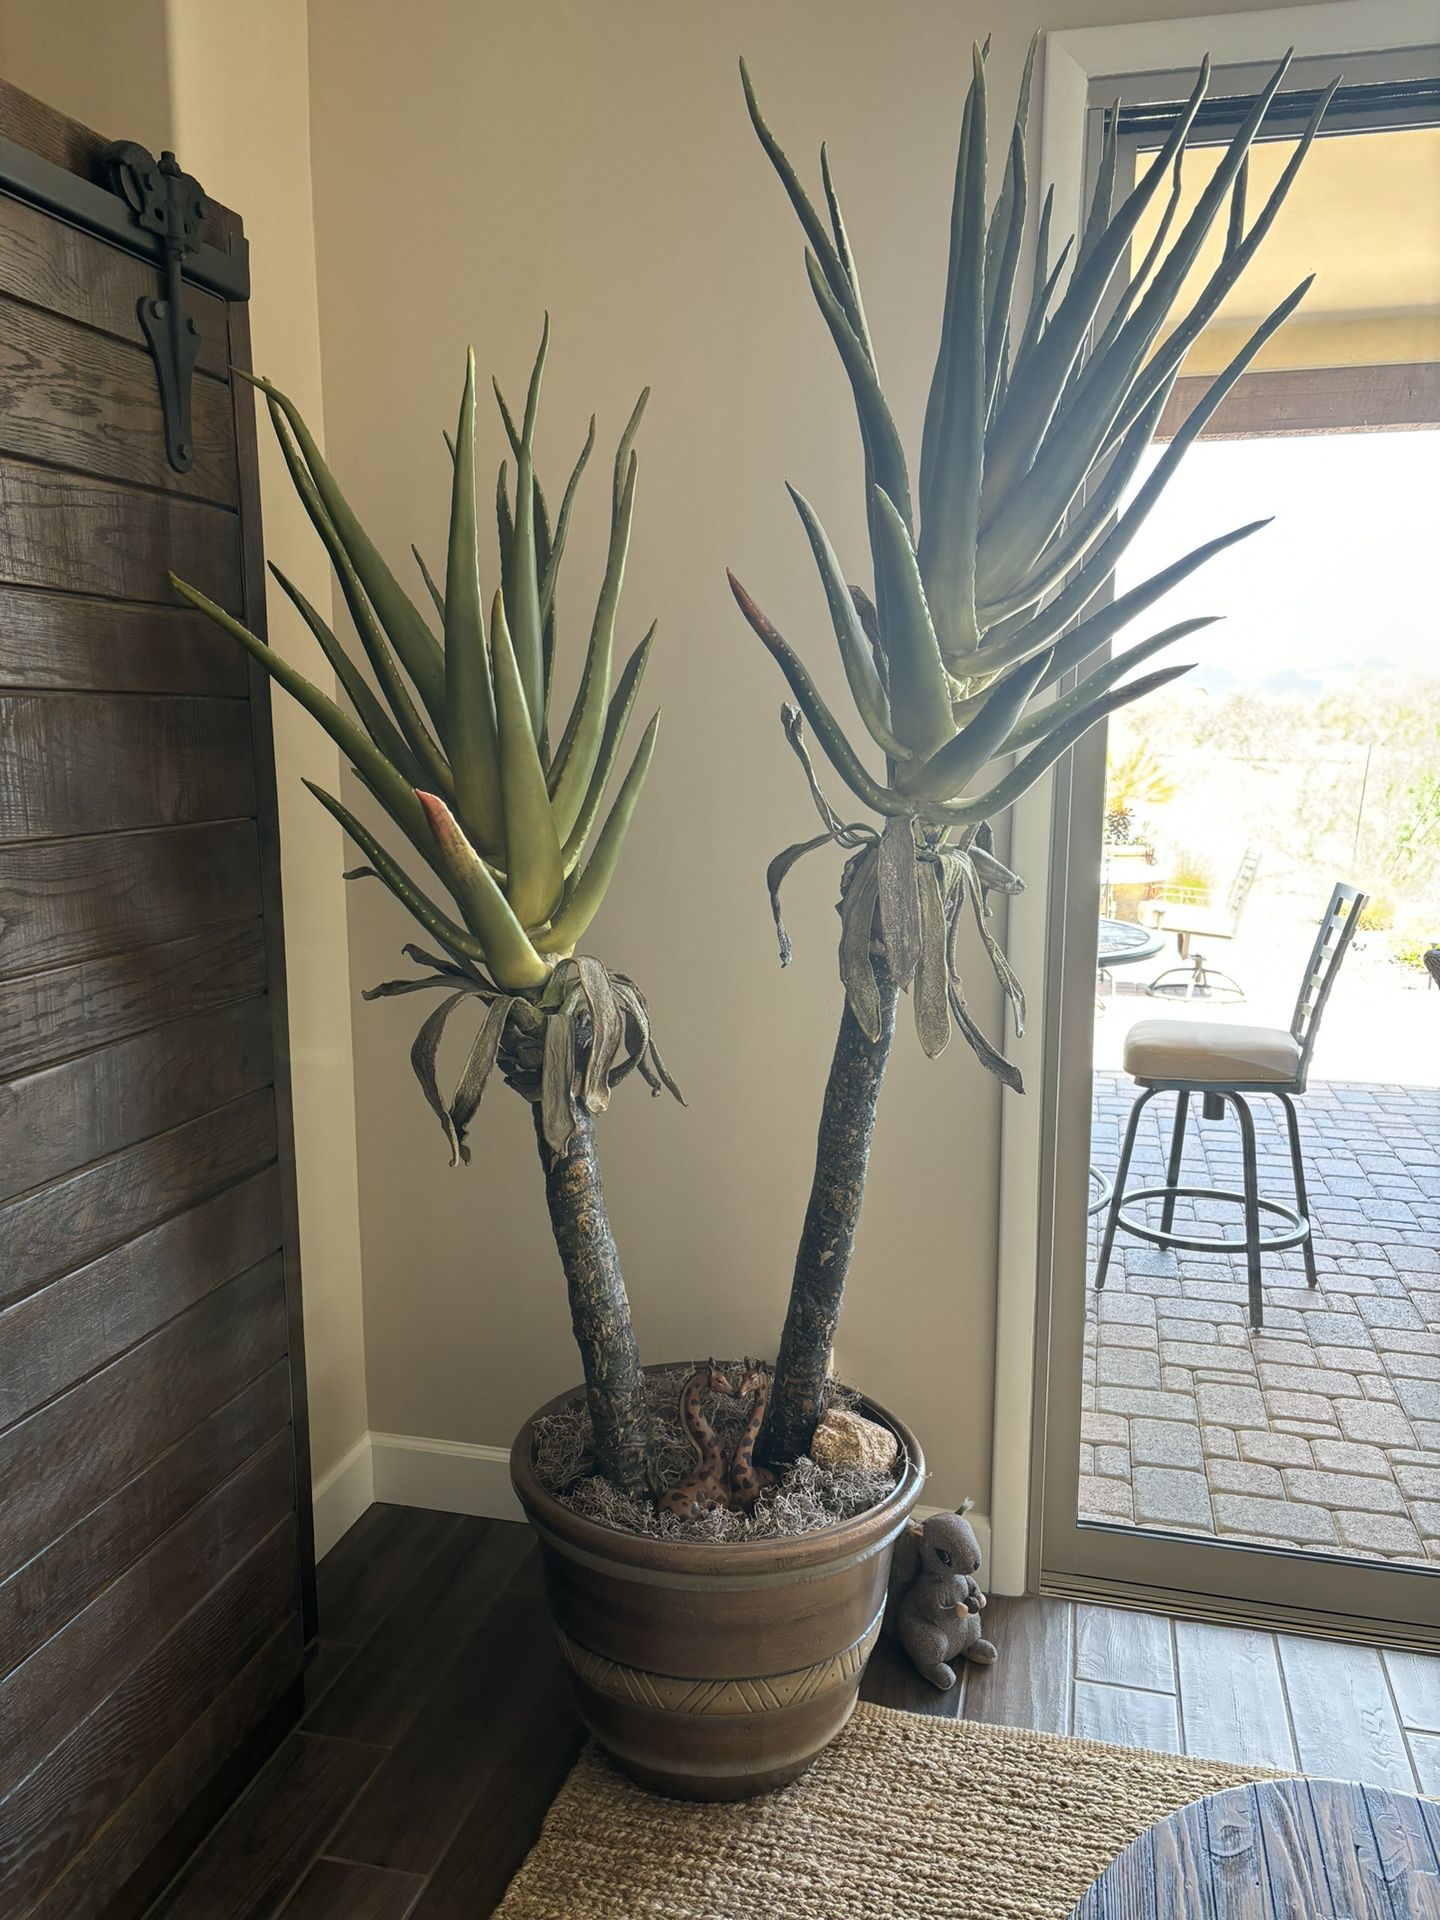 Indoor Faux Yucca In Decorative Pot